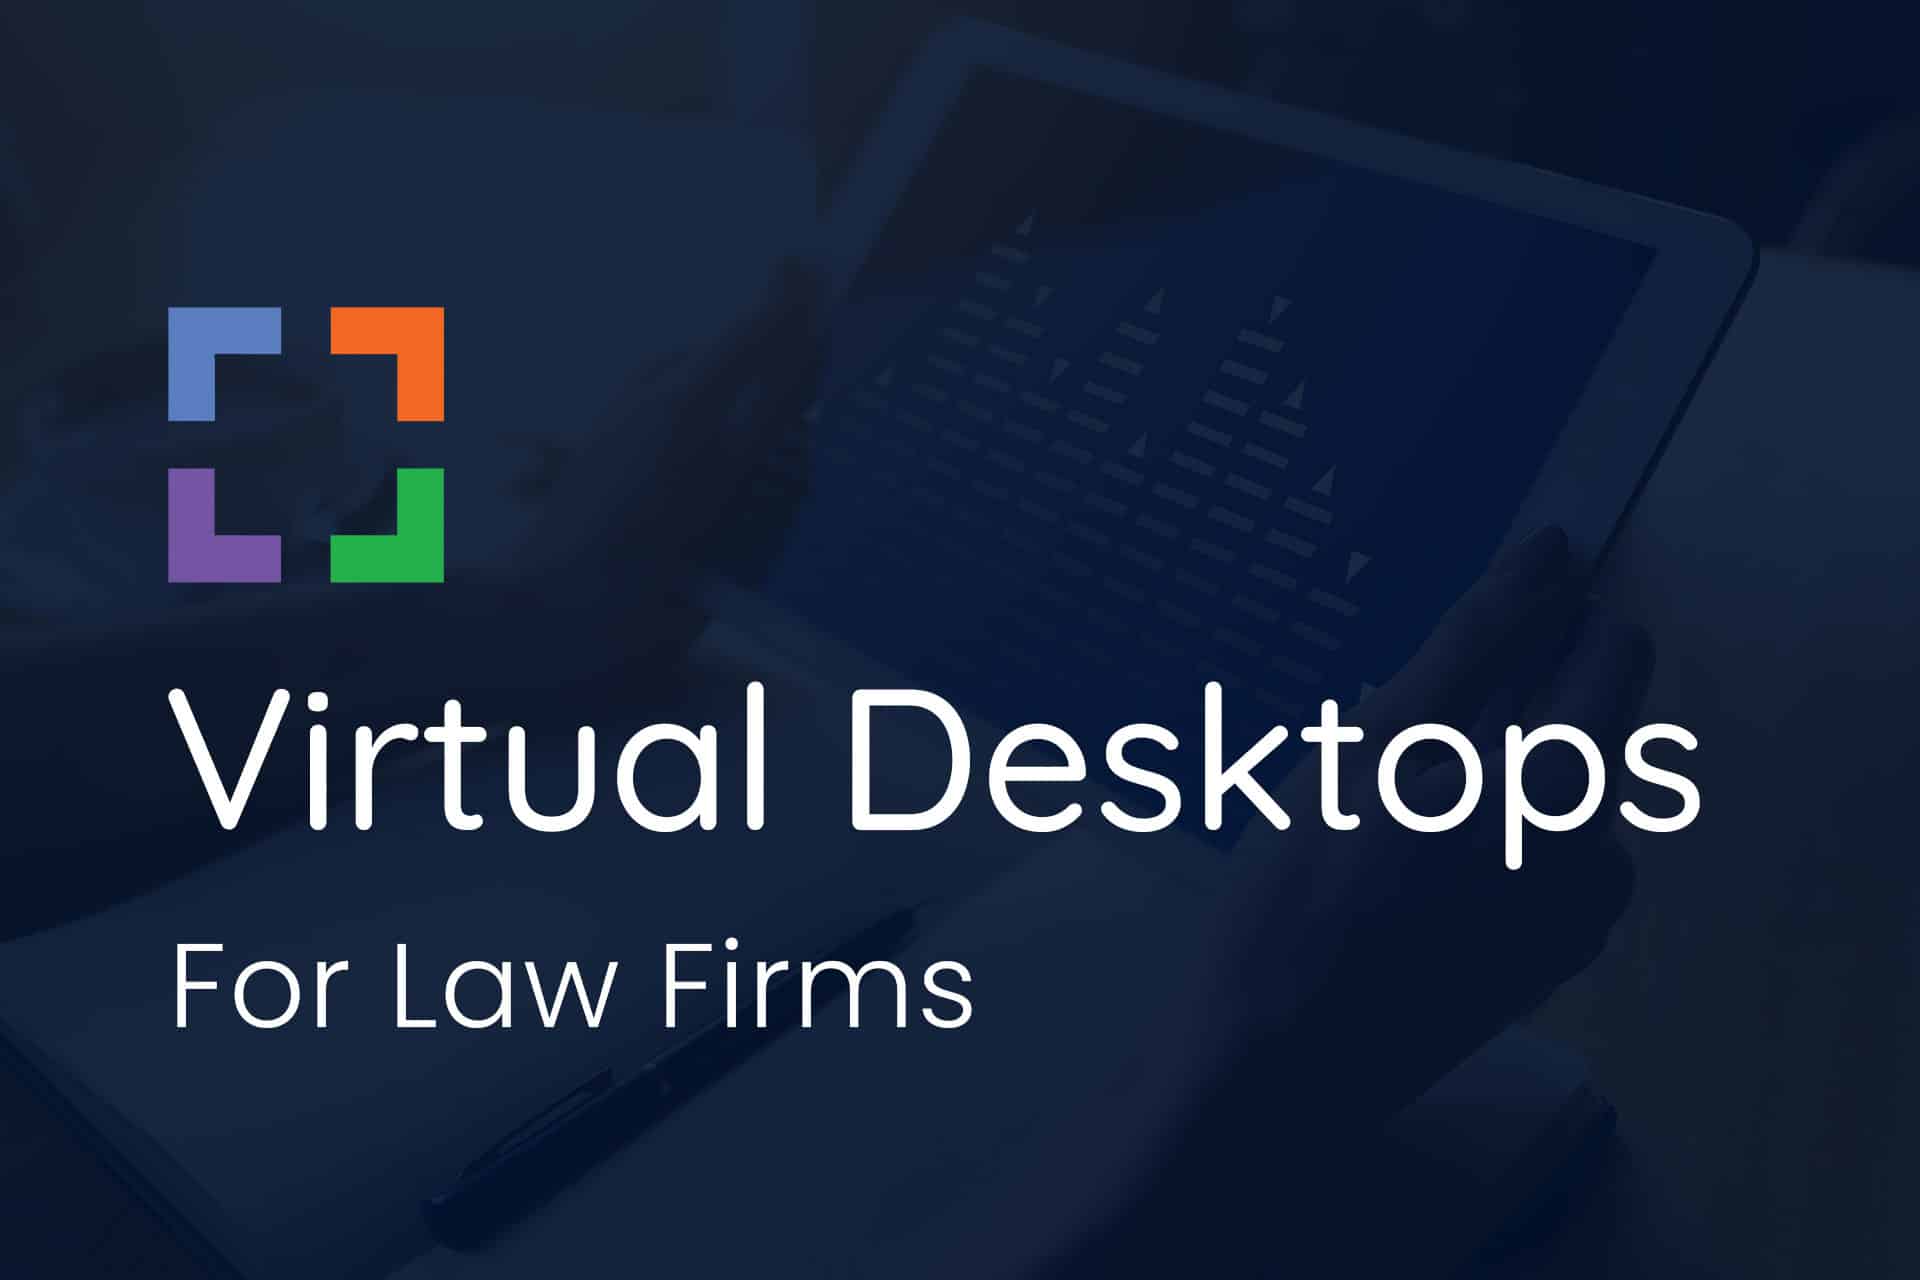 Virtual Desktops for Law Firms Blog